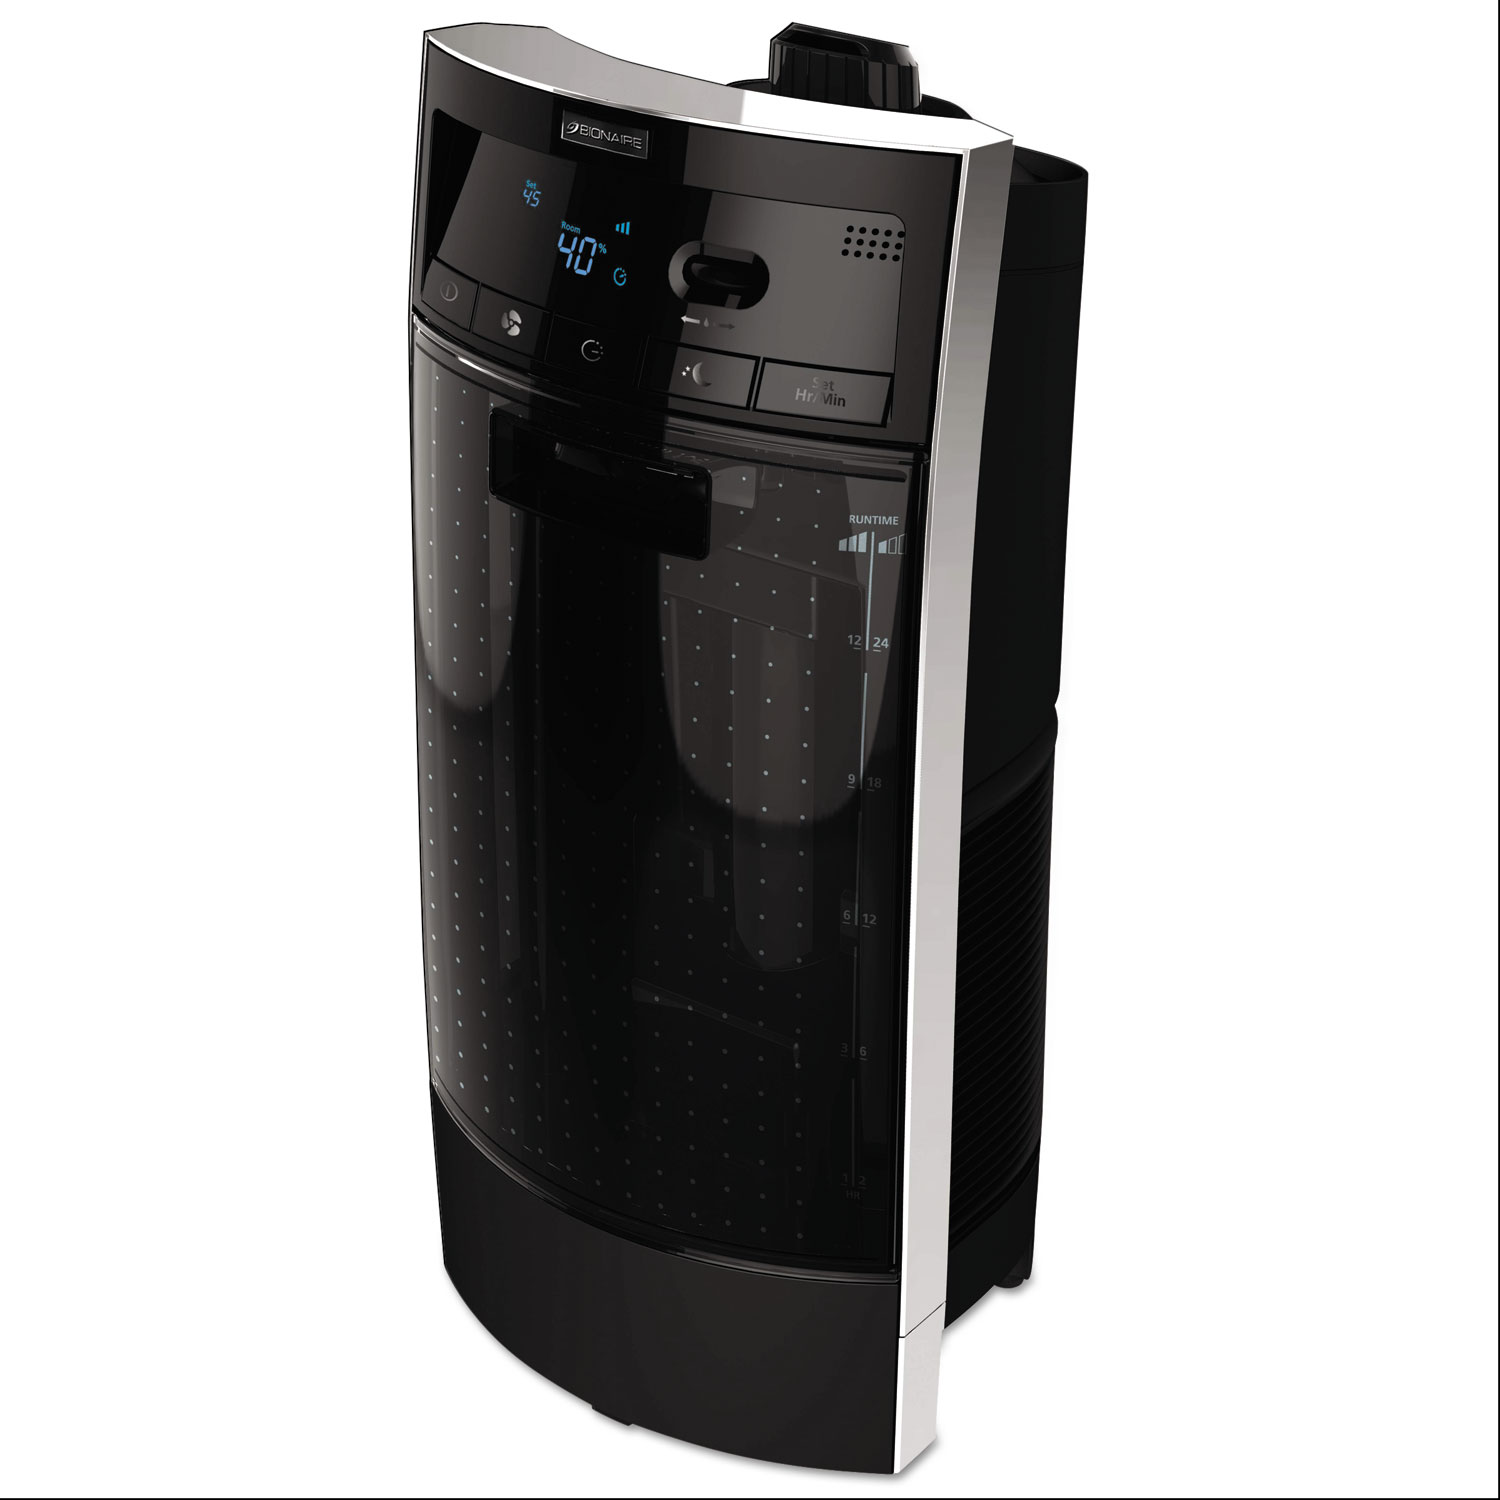 Digital Ultrasonic Tower Humidifier, 3 Gal Output, 10w x 10 1/4d x 22h, Black